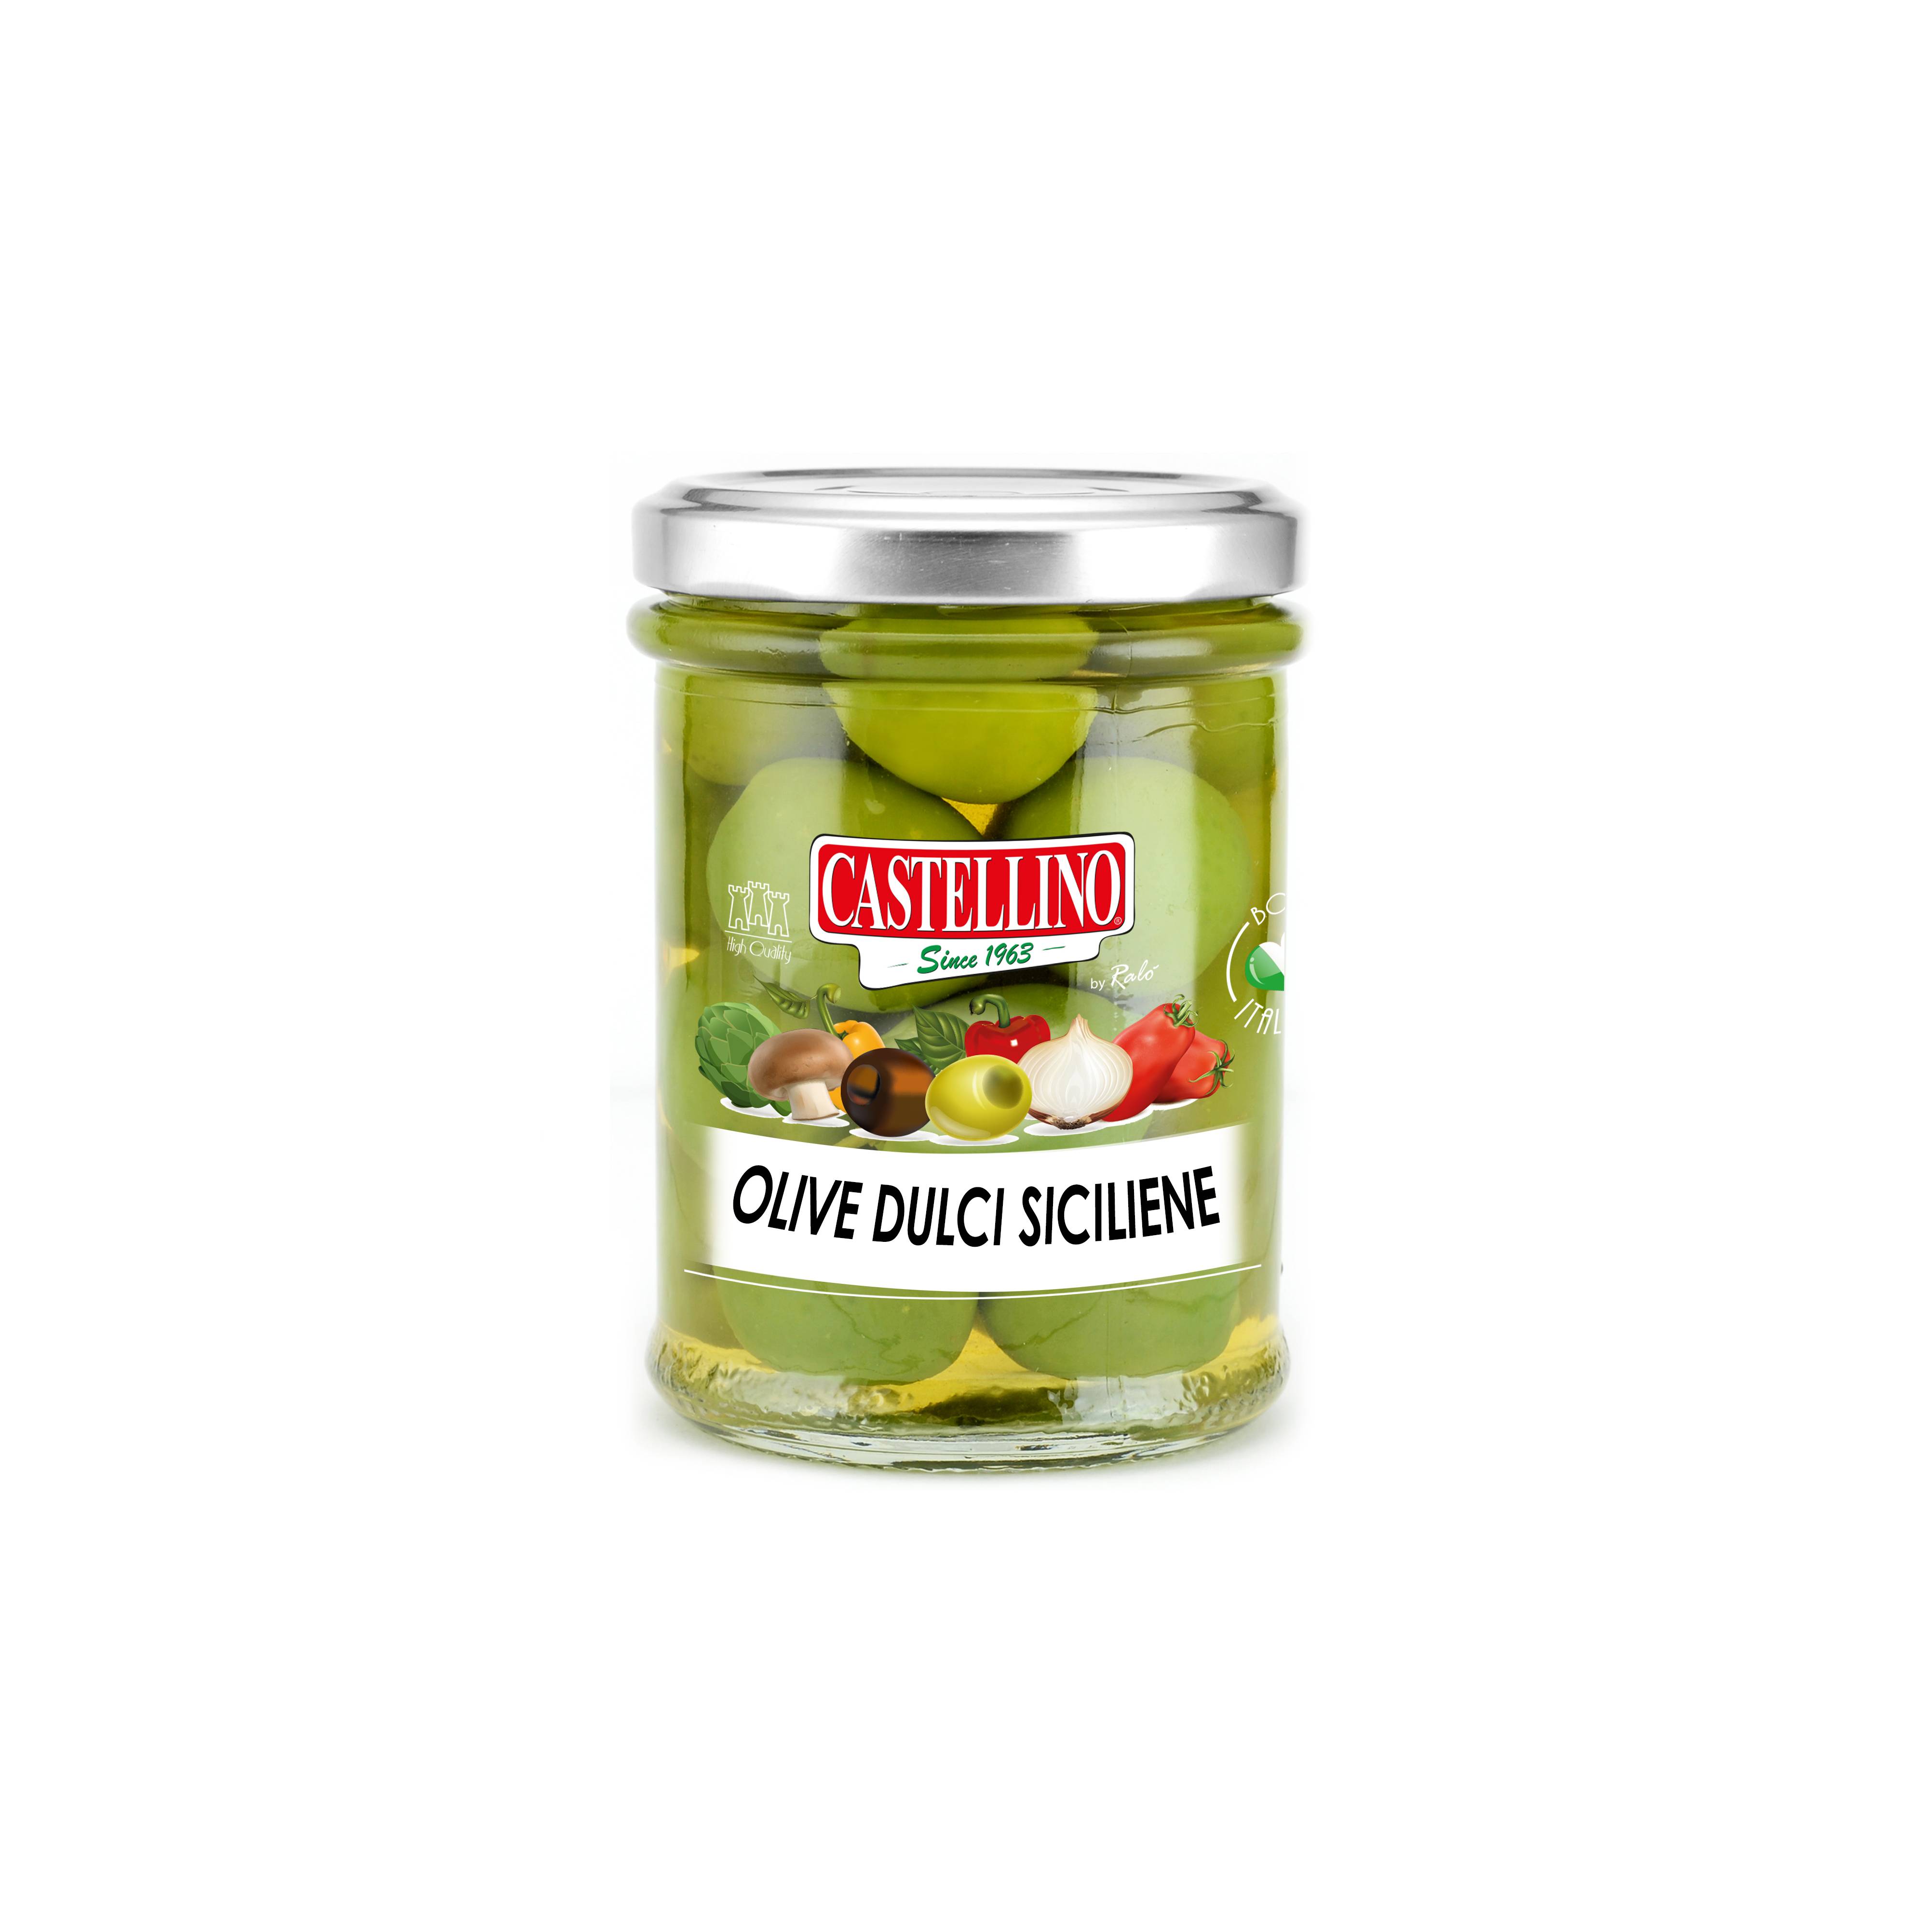 Olive dulci Siciliene "Verdolina" Castellino 180g